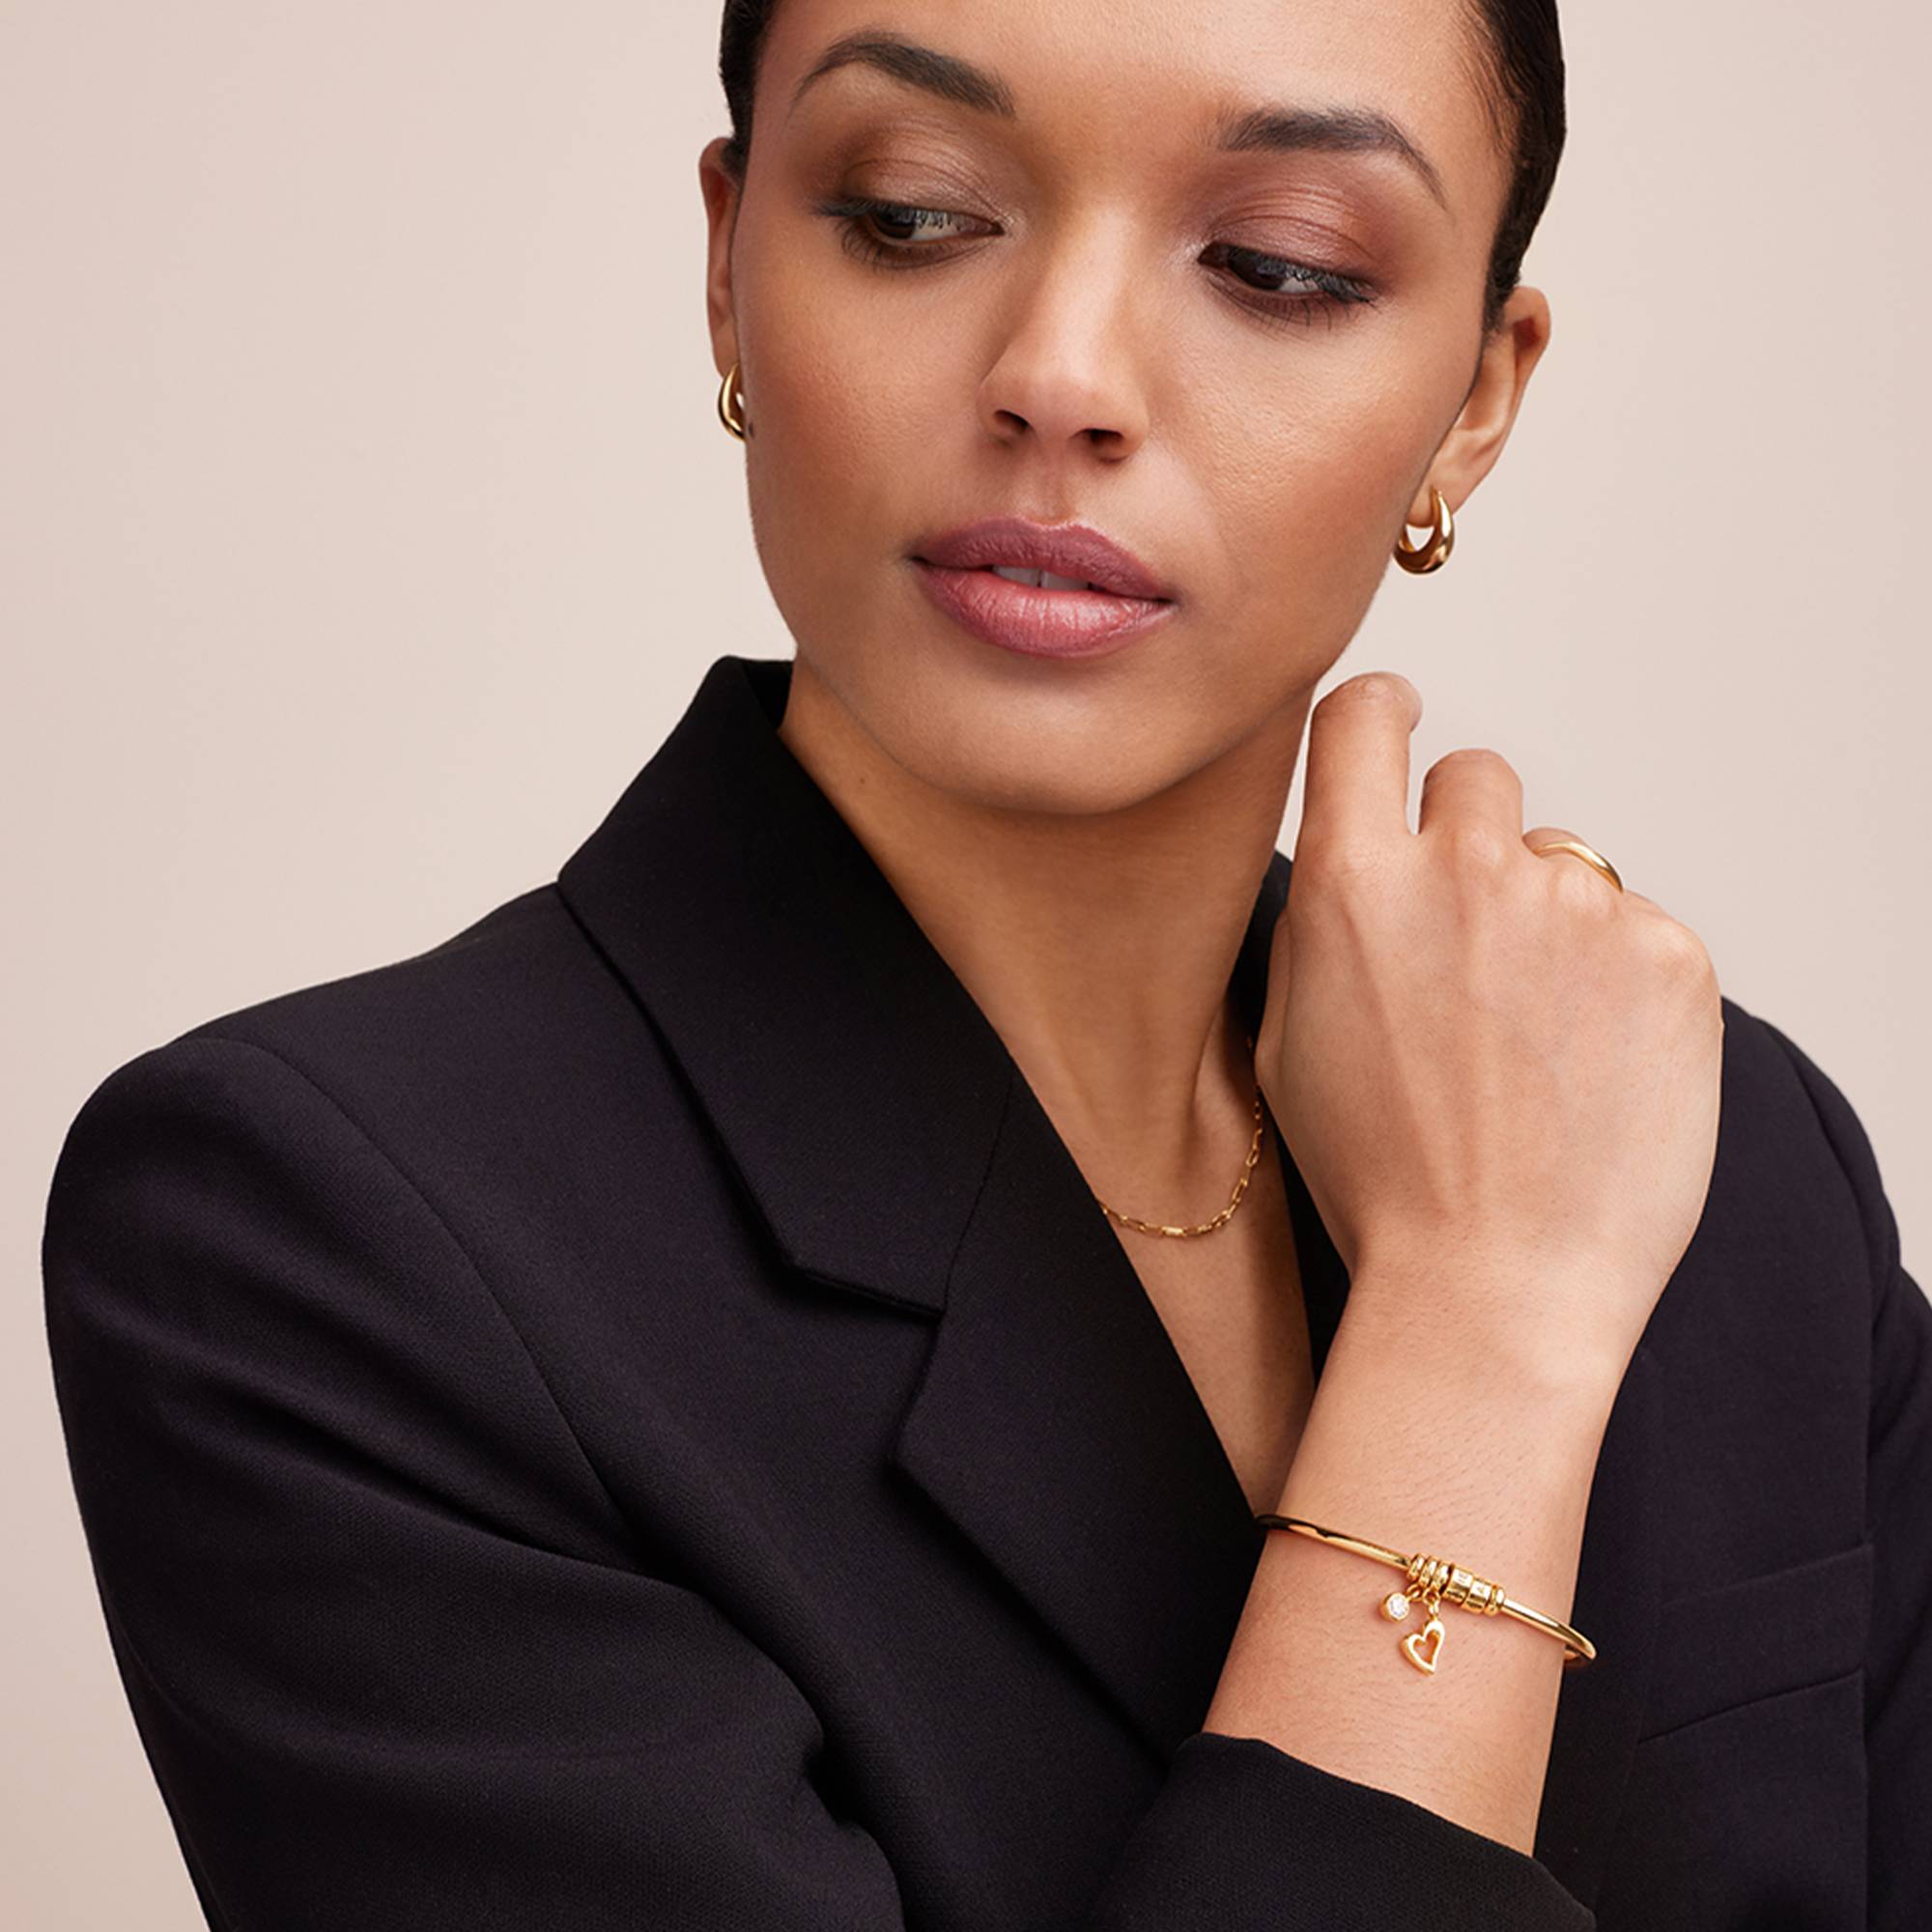 Linda Bangle Bracelet in Gold Vermeil-4 product photo